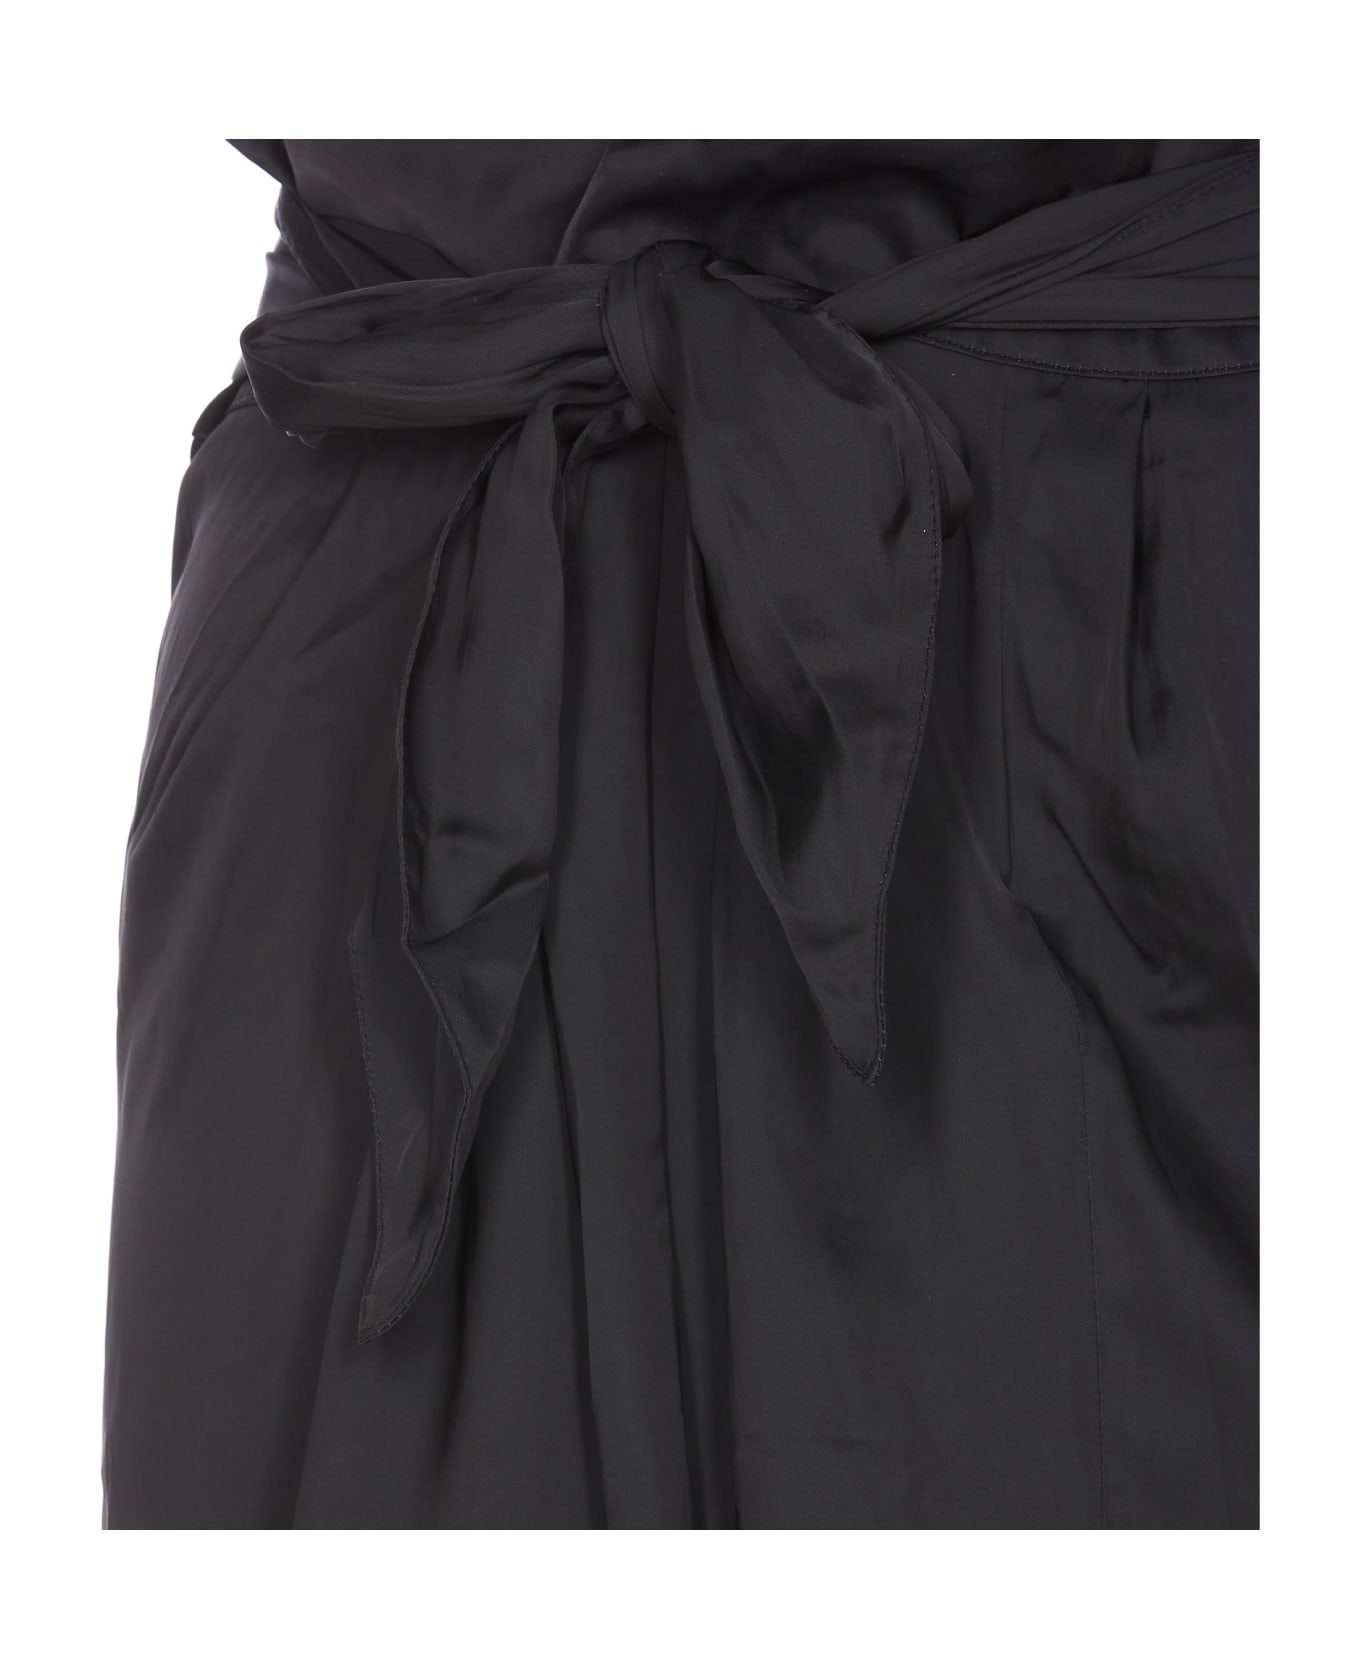 Zadig & Voltaire Joji Satin Skirt - Black スカート